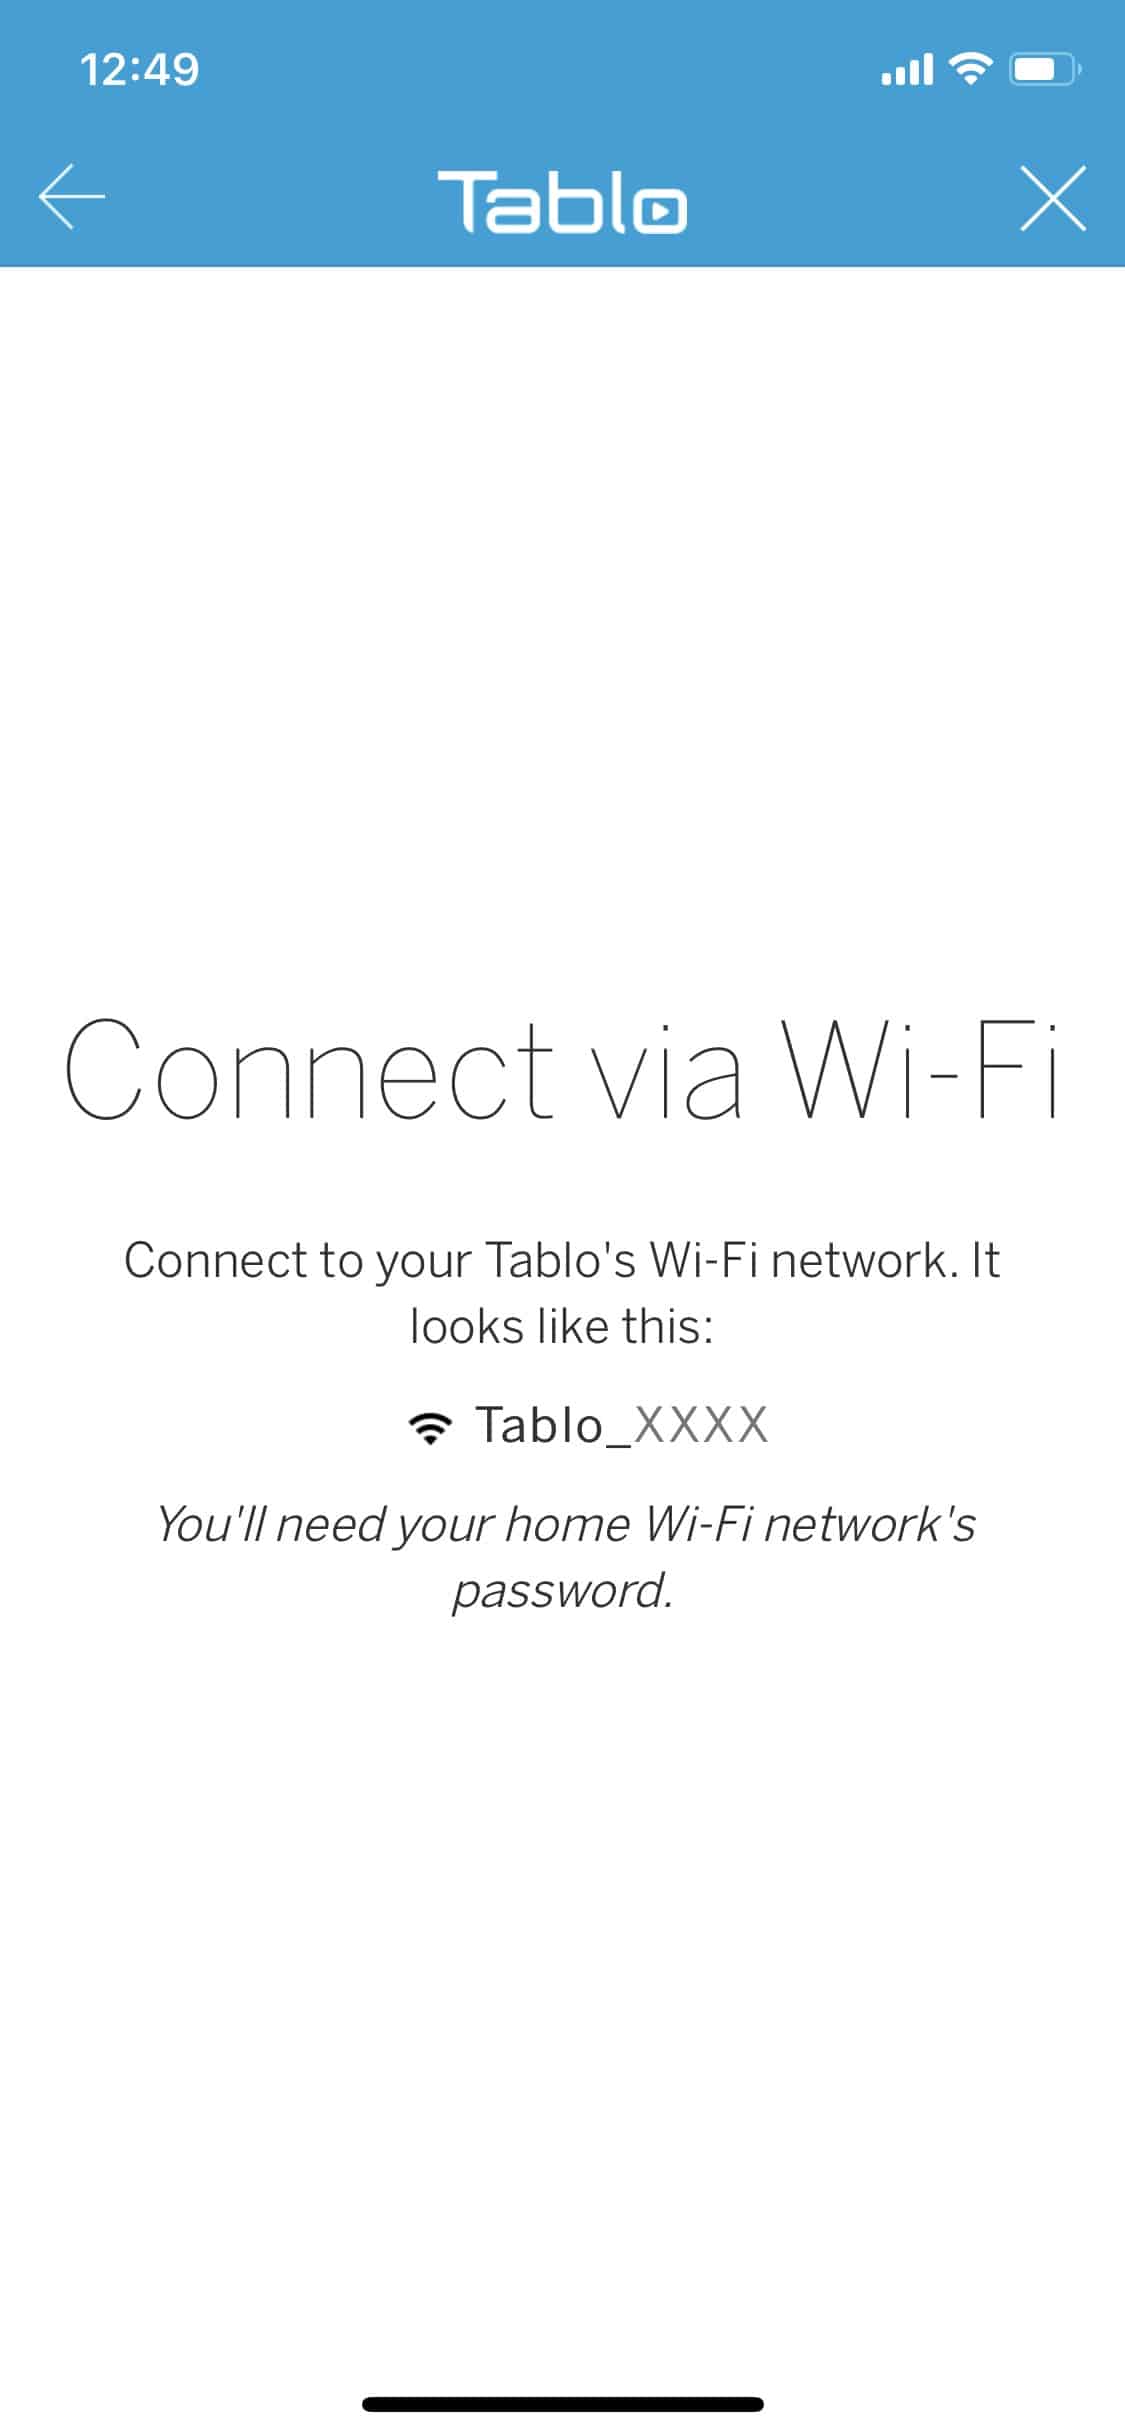 Tablo Quad review - Tablo Wi-Fi connection on iOS